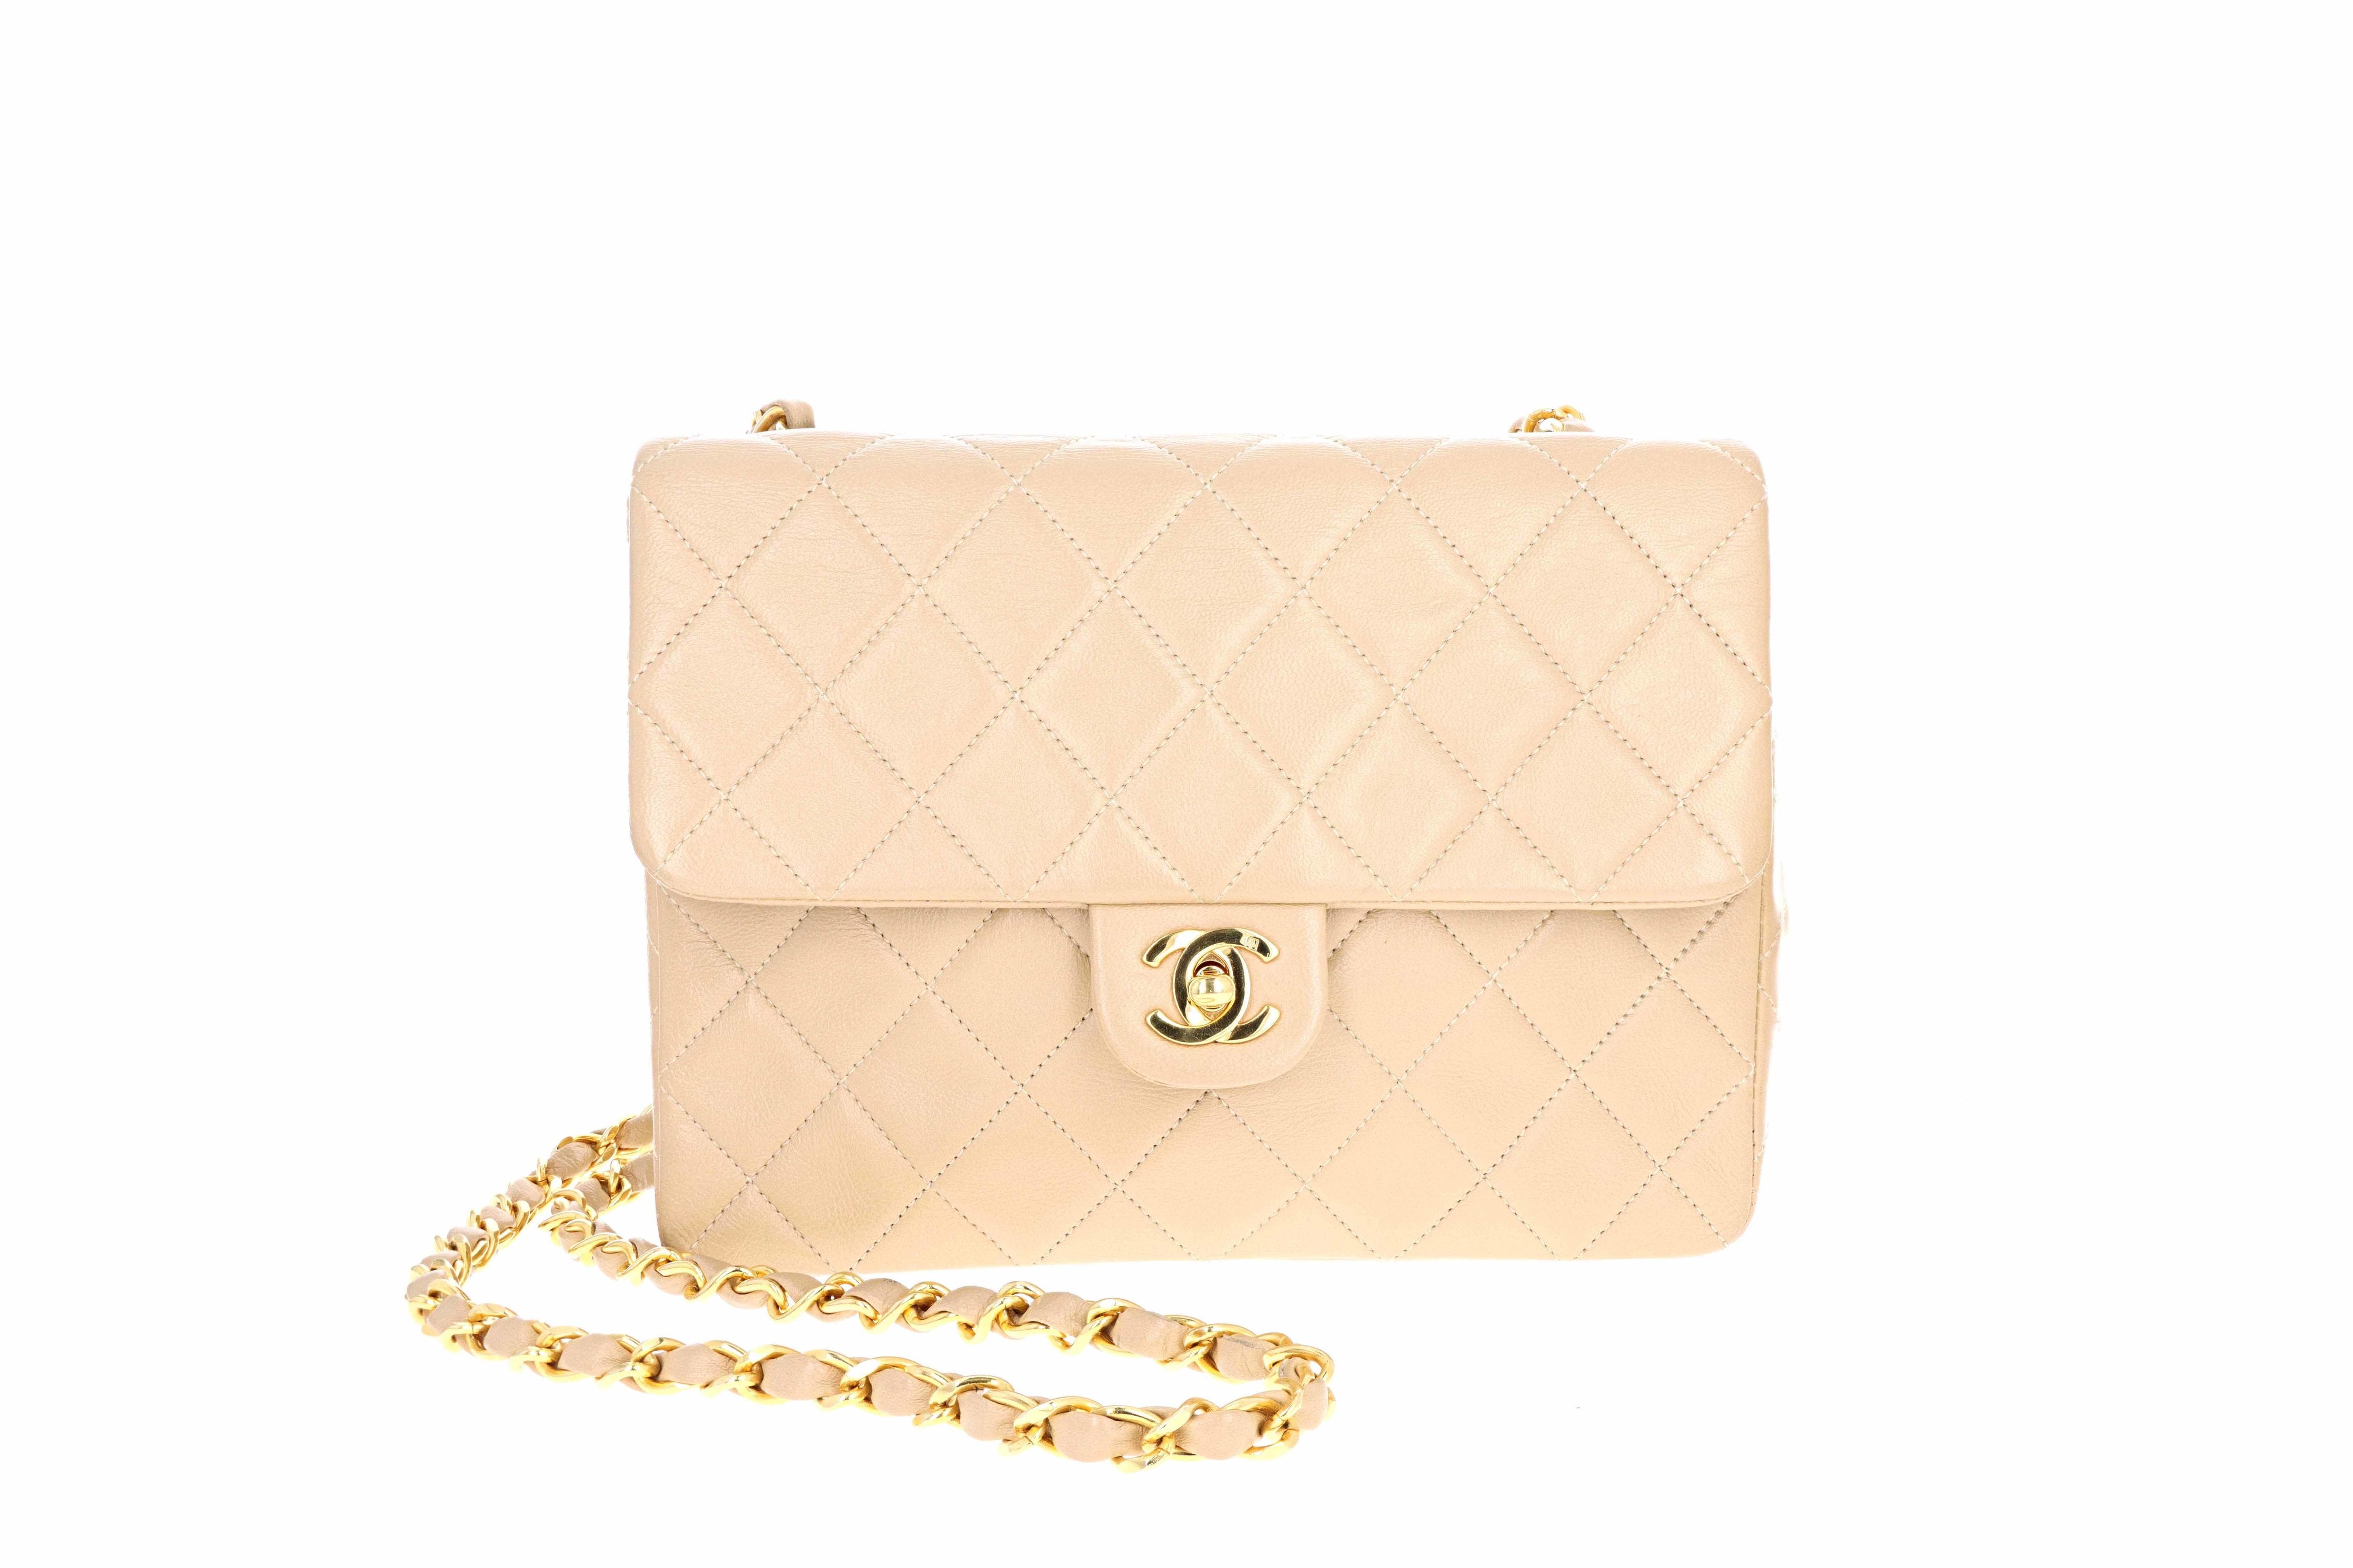 Chanel 2.55 Beige Caviar Mini Classic Flap Bag at Jill's Consignment